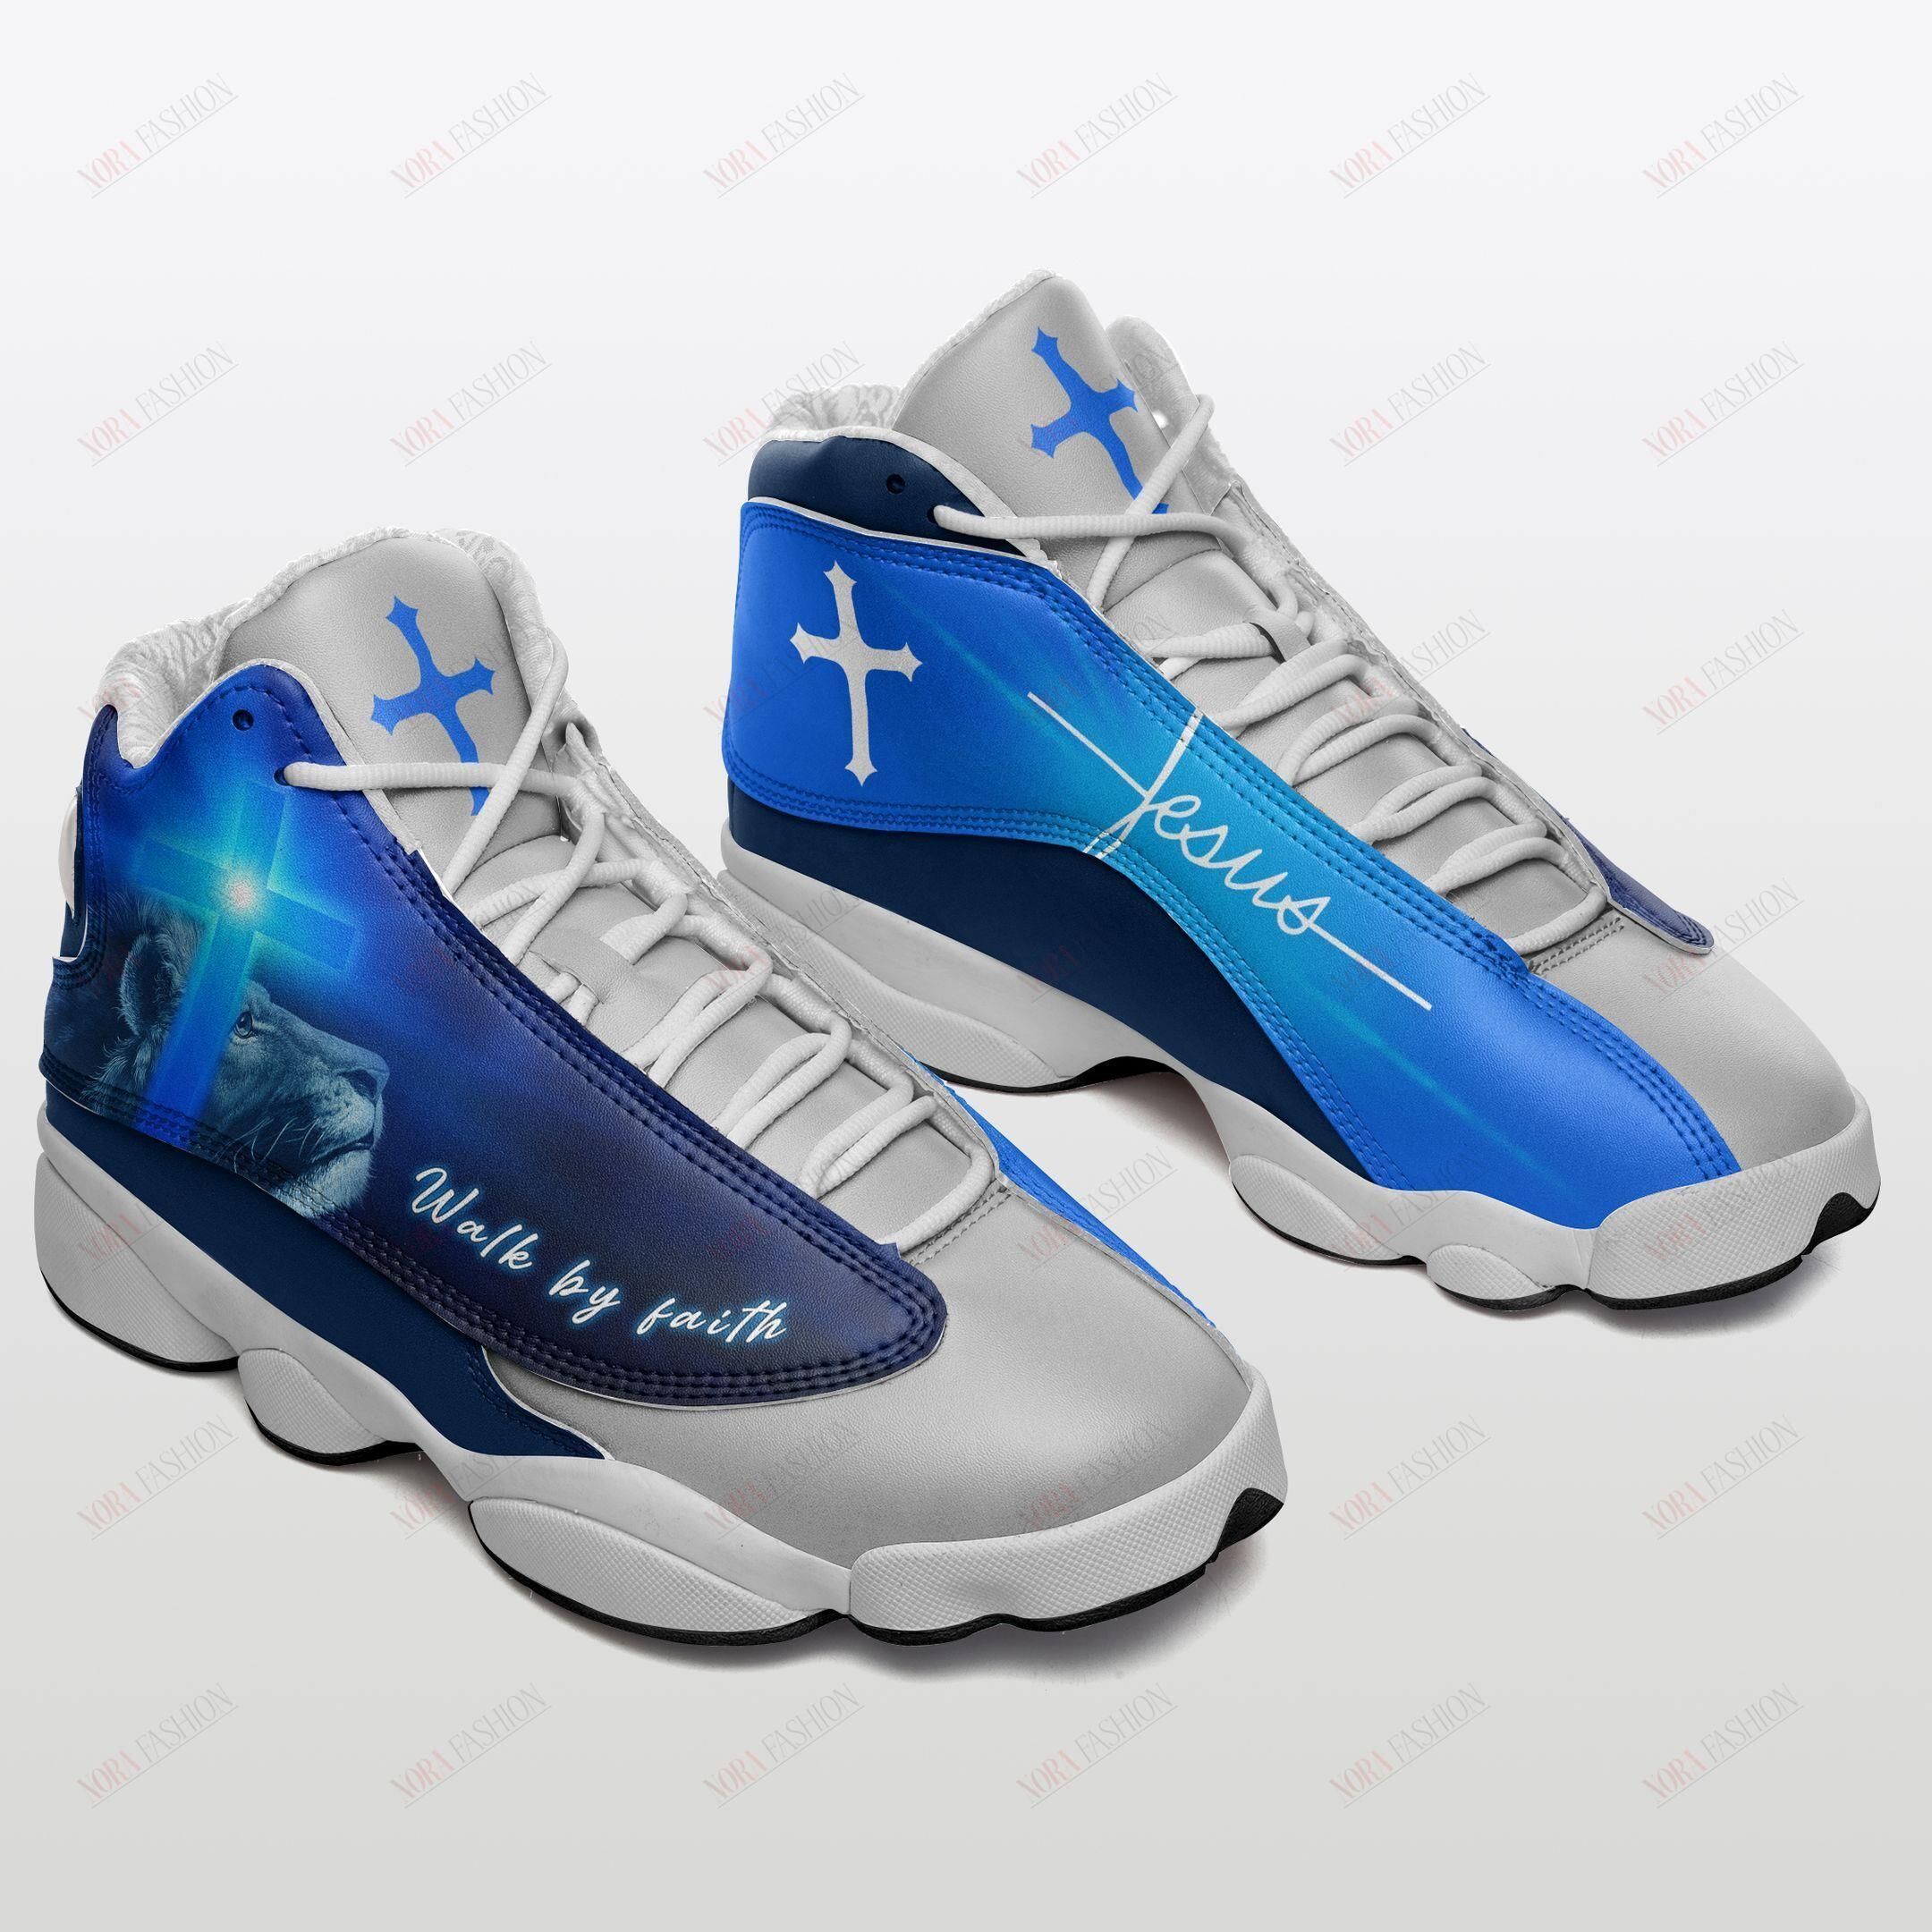 Walk by faith jesus air jordan 13 sneakers sport shoes full size for men- women